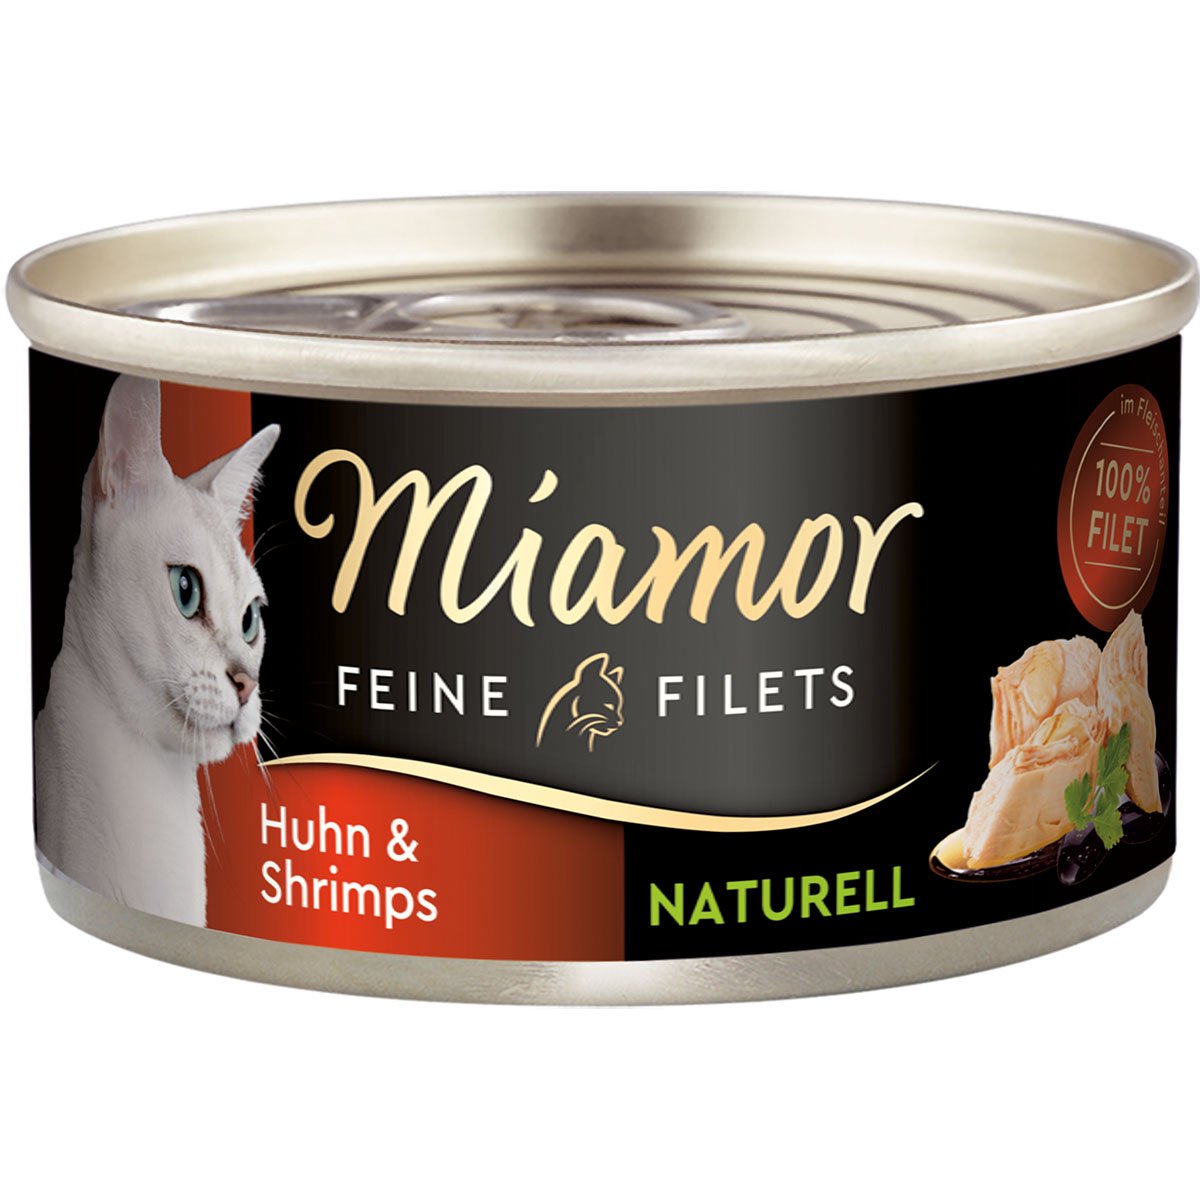 Miamor Feine Filets Naturell Huhn & Shrimps 48x80g